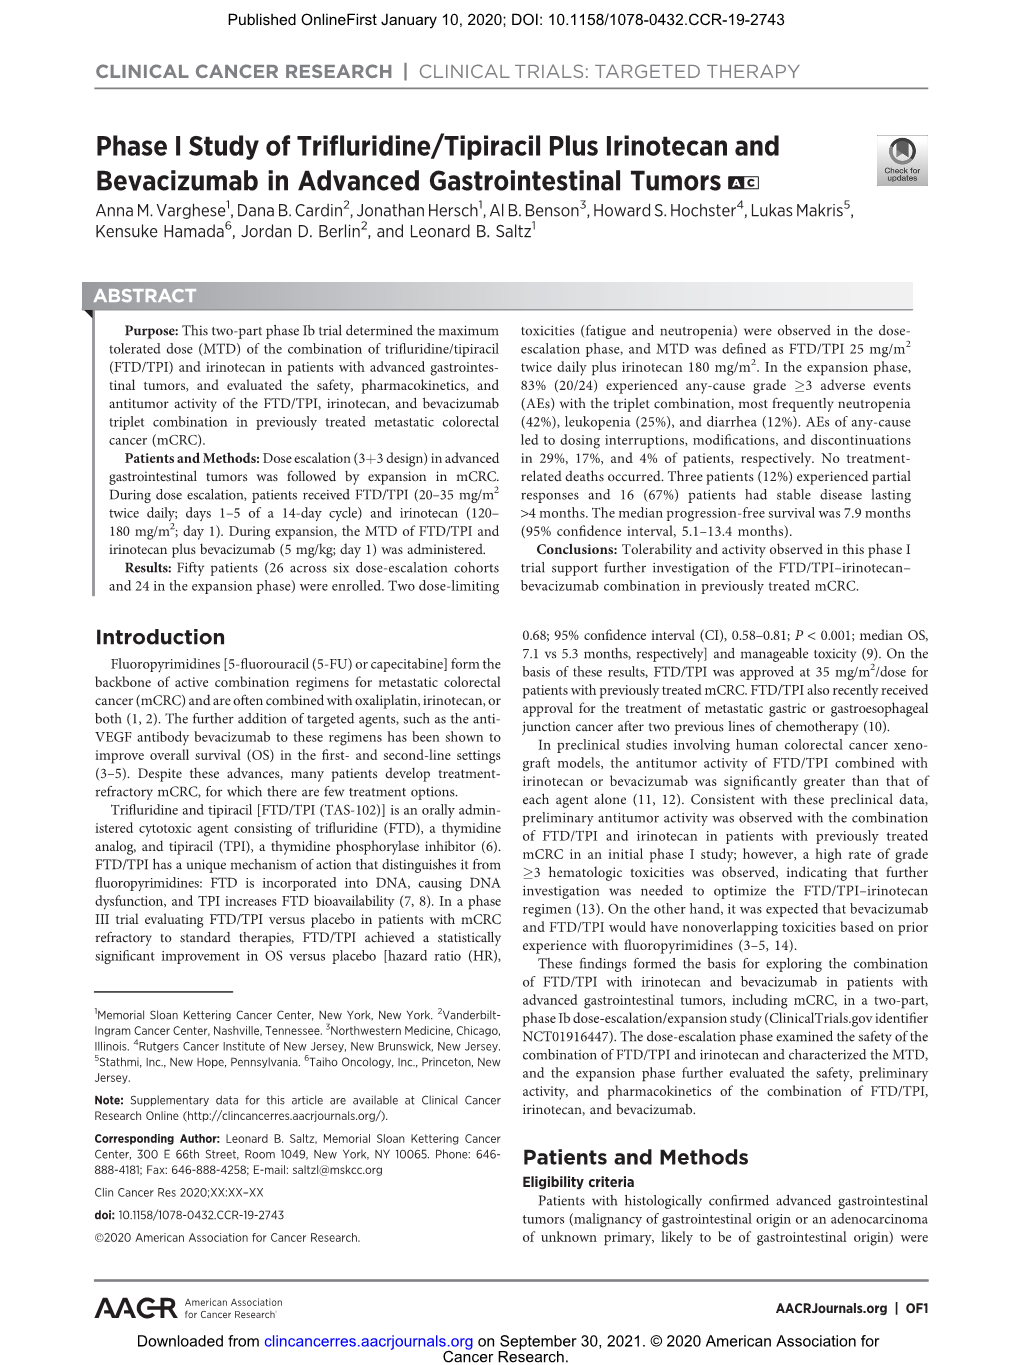 Phase I Study of Trifluridine/Tipiracil Plus Irinotecan and Bevacizumab in Advanced Gastrointestinal Tumors